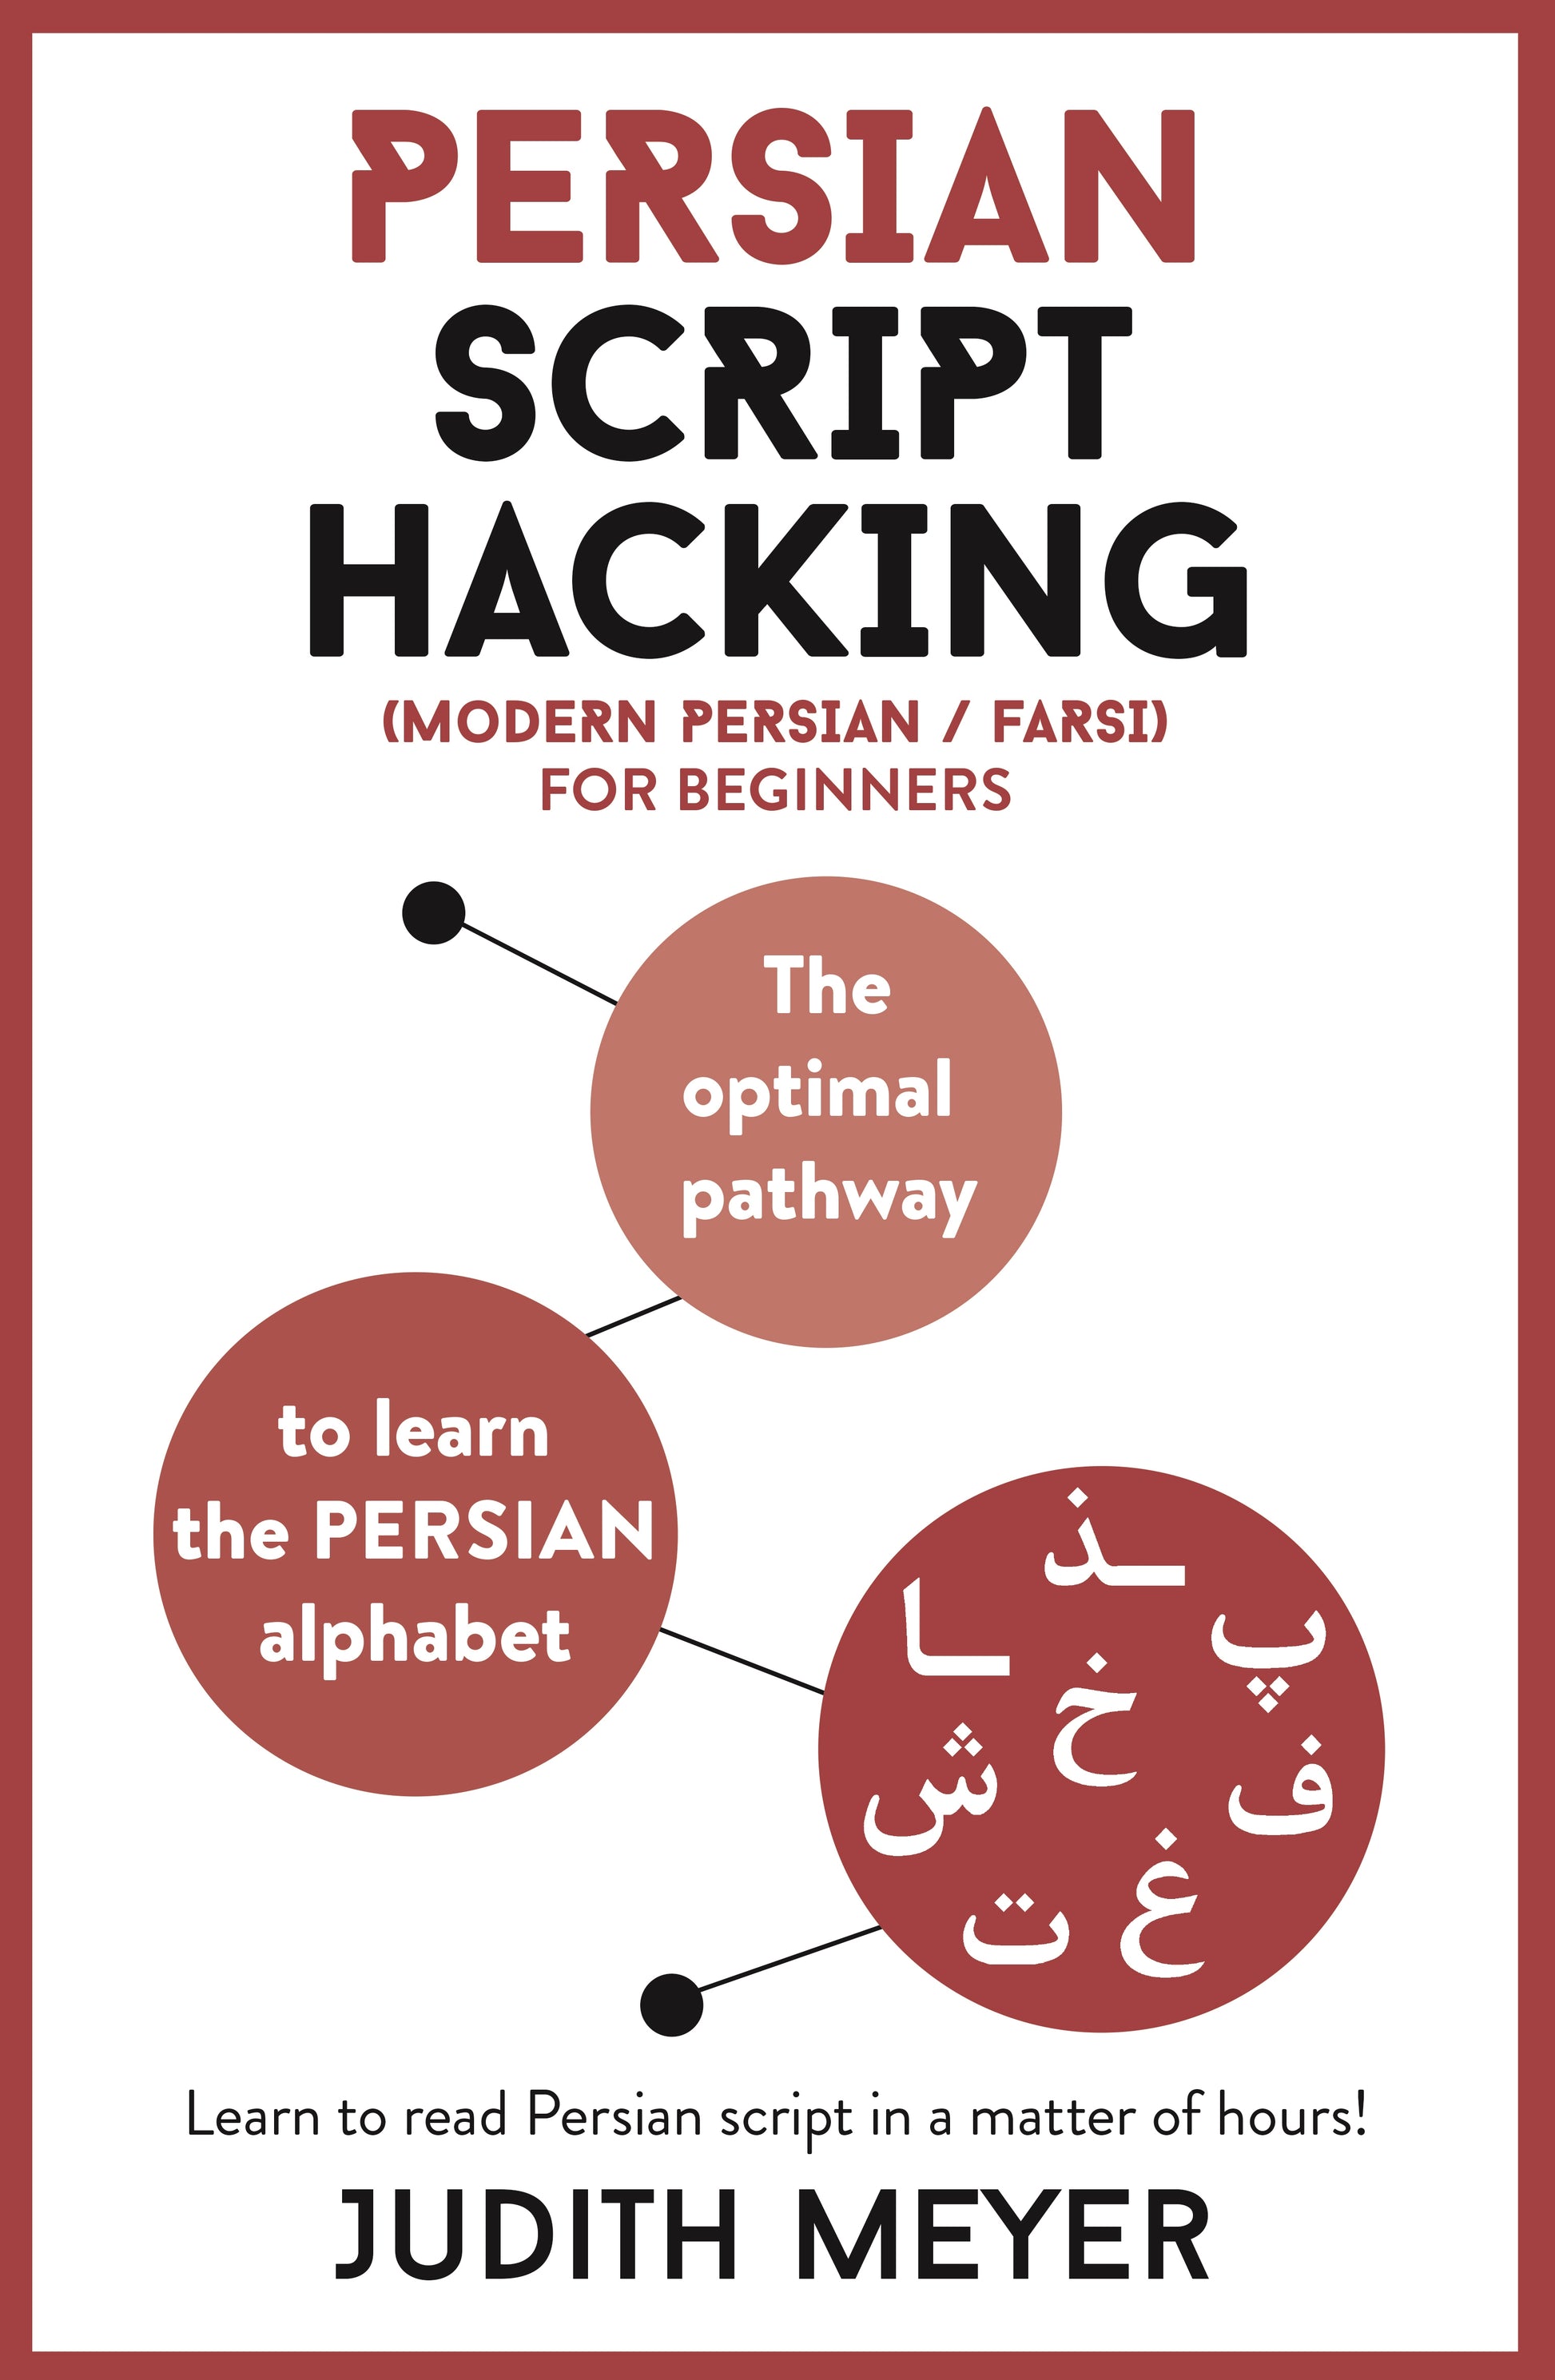 Persian Script Hacking by Judith Meyer